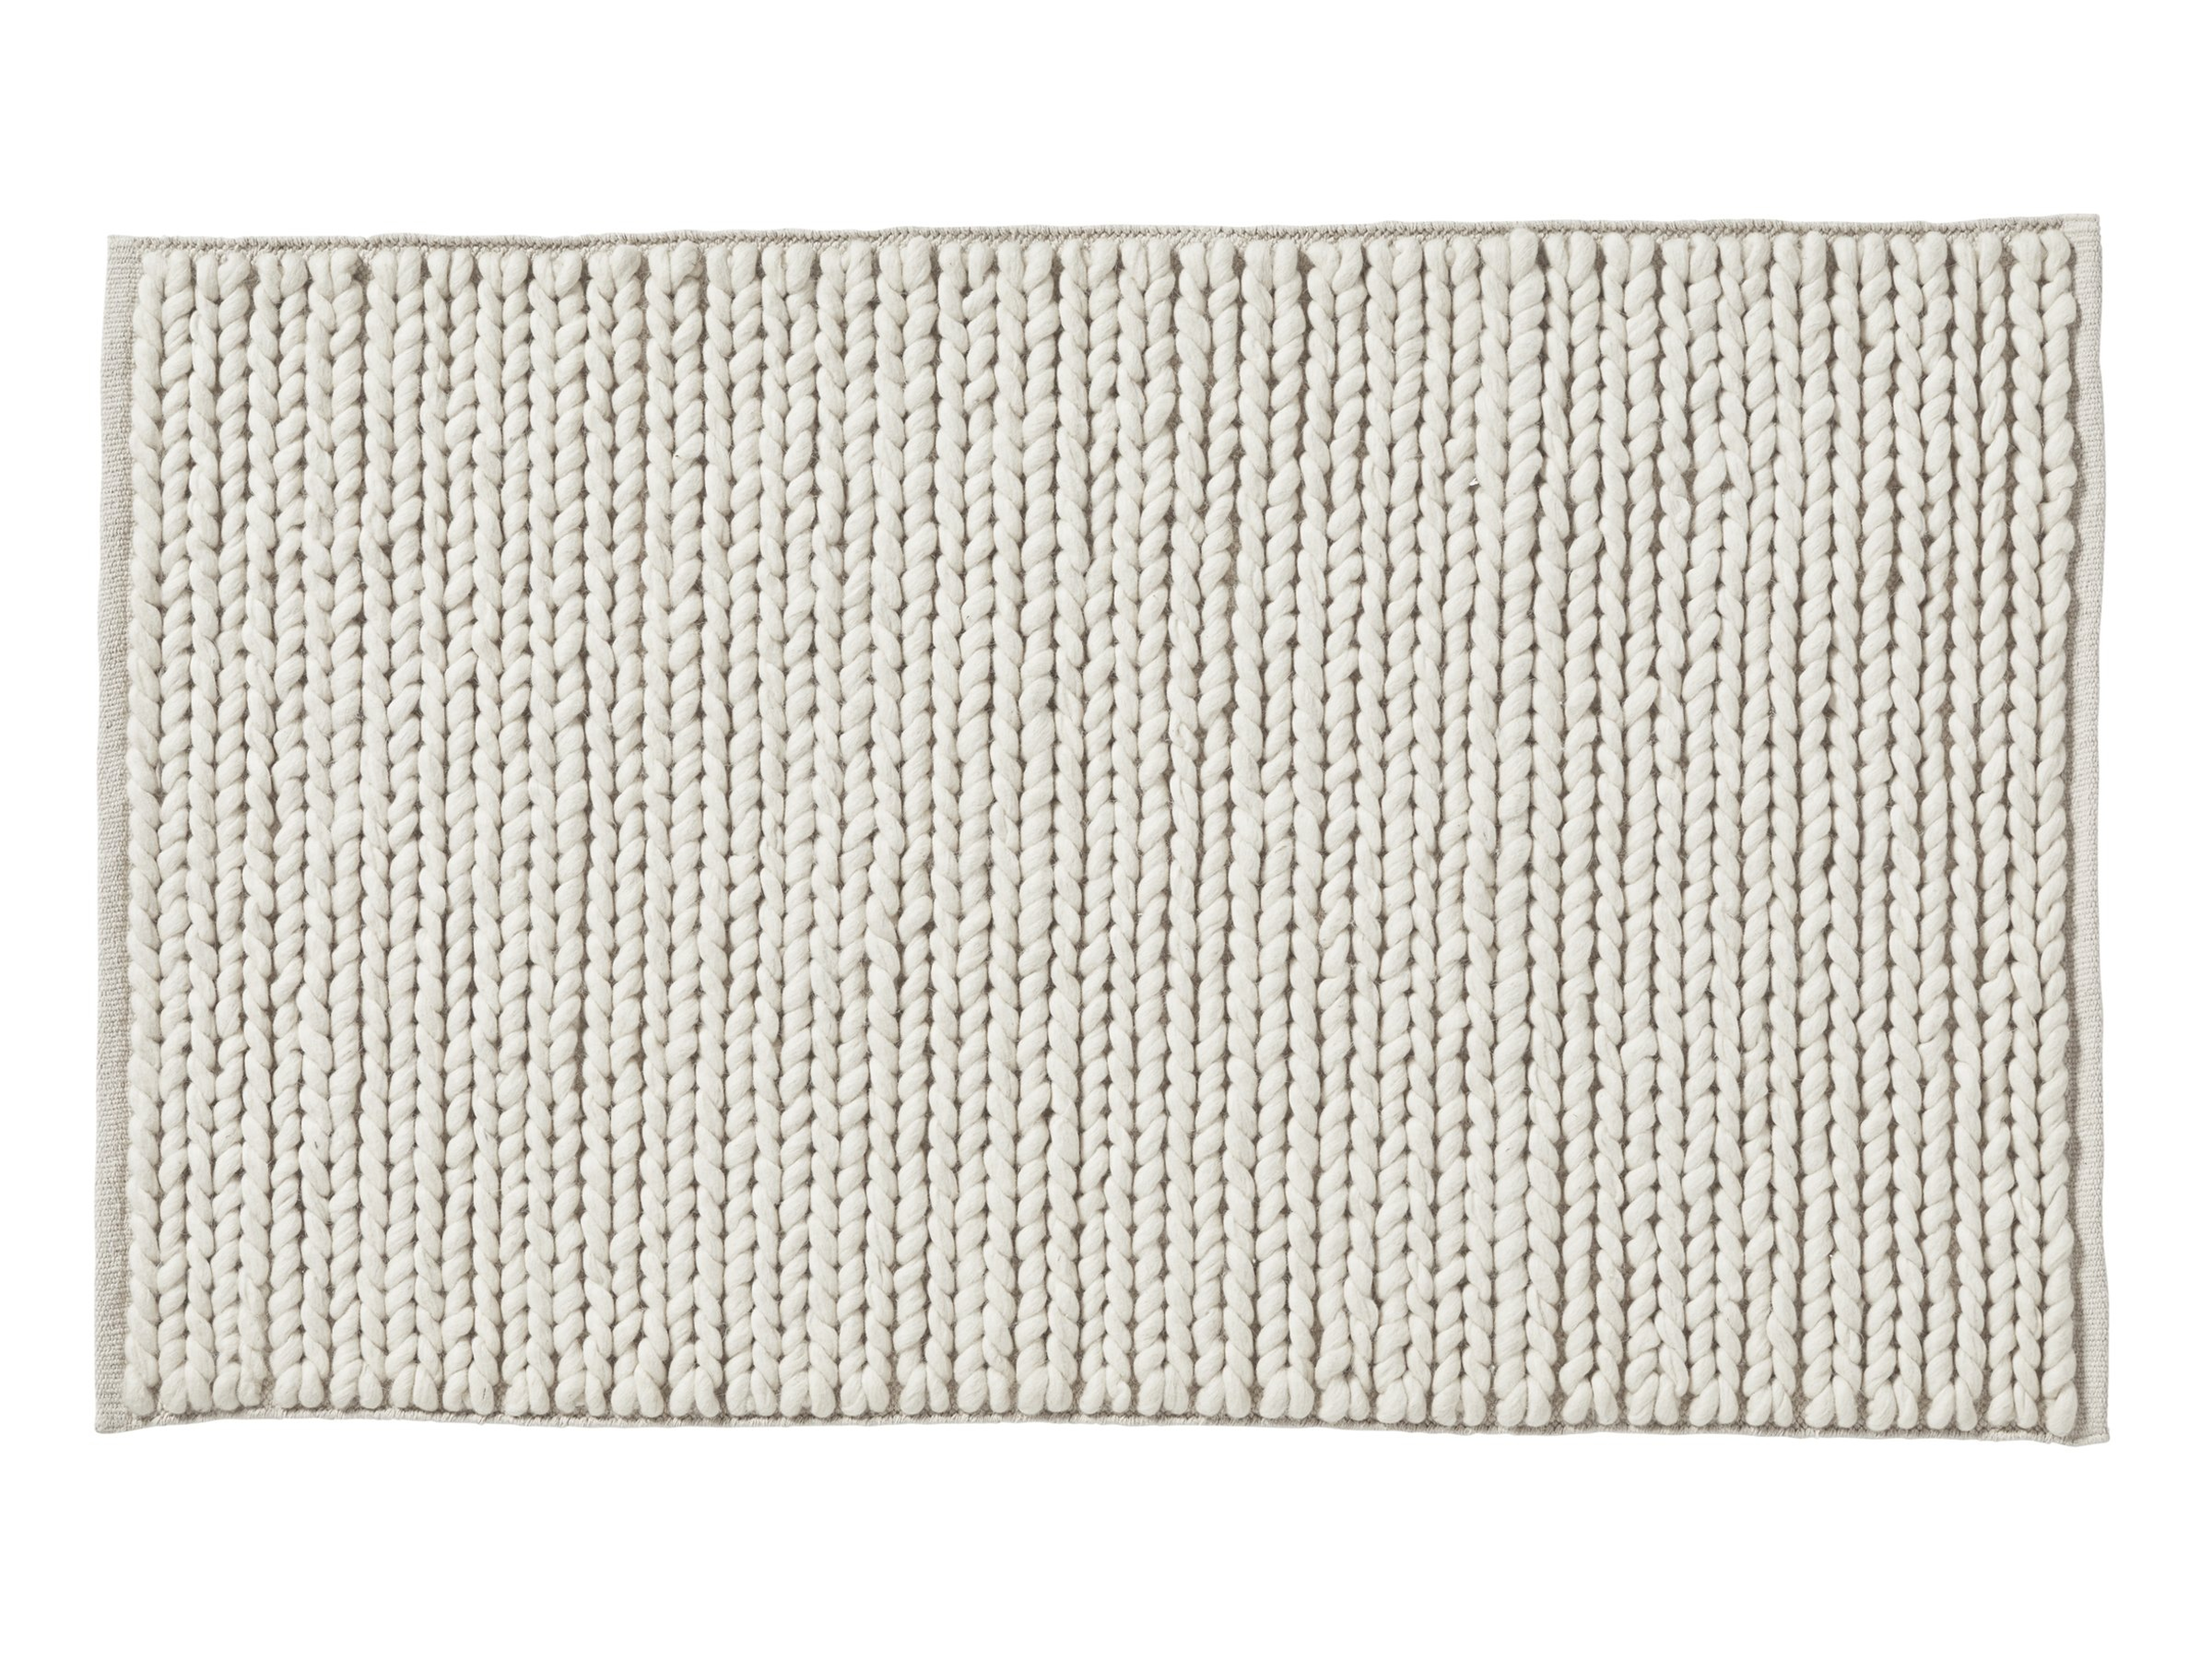 5' x 8' Braided Wool Rug in Ivory | Parachute - Parachute